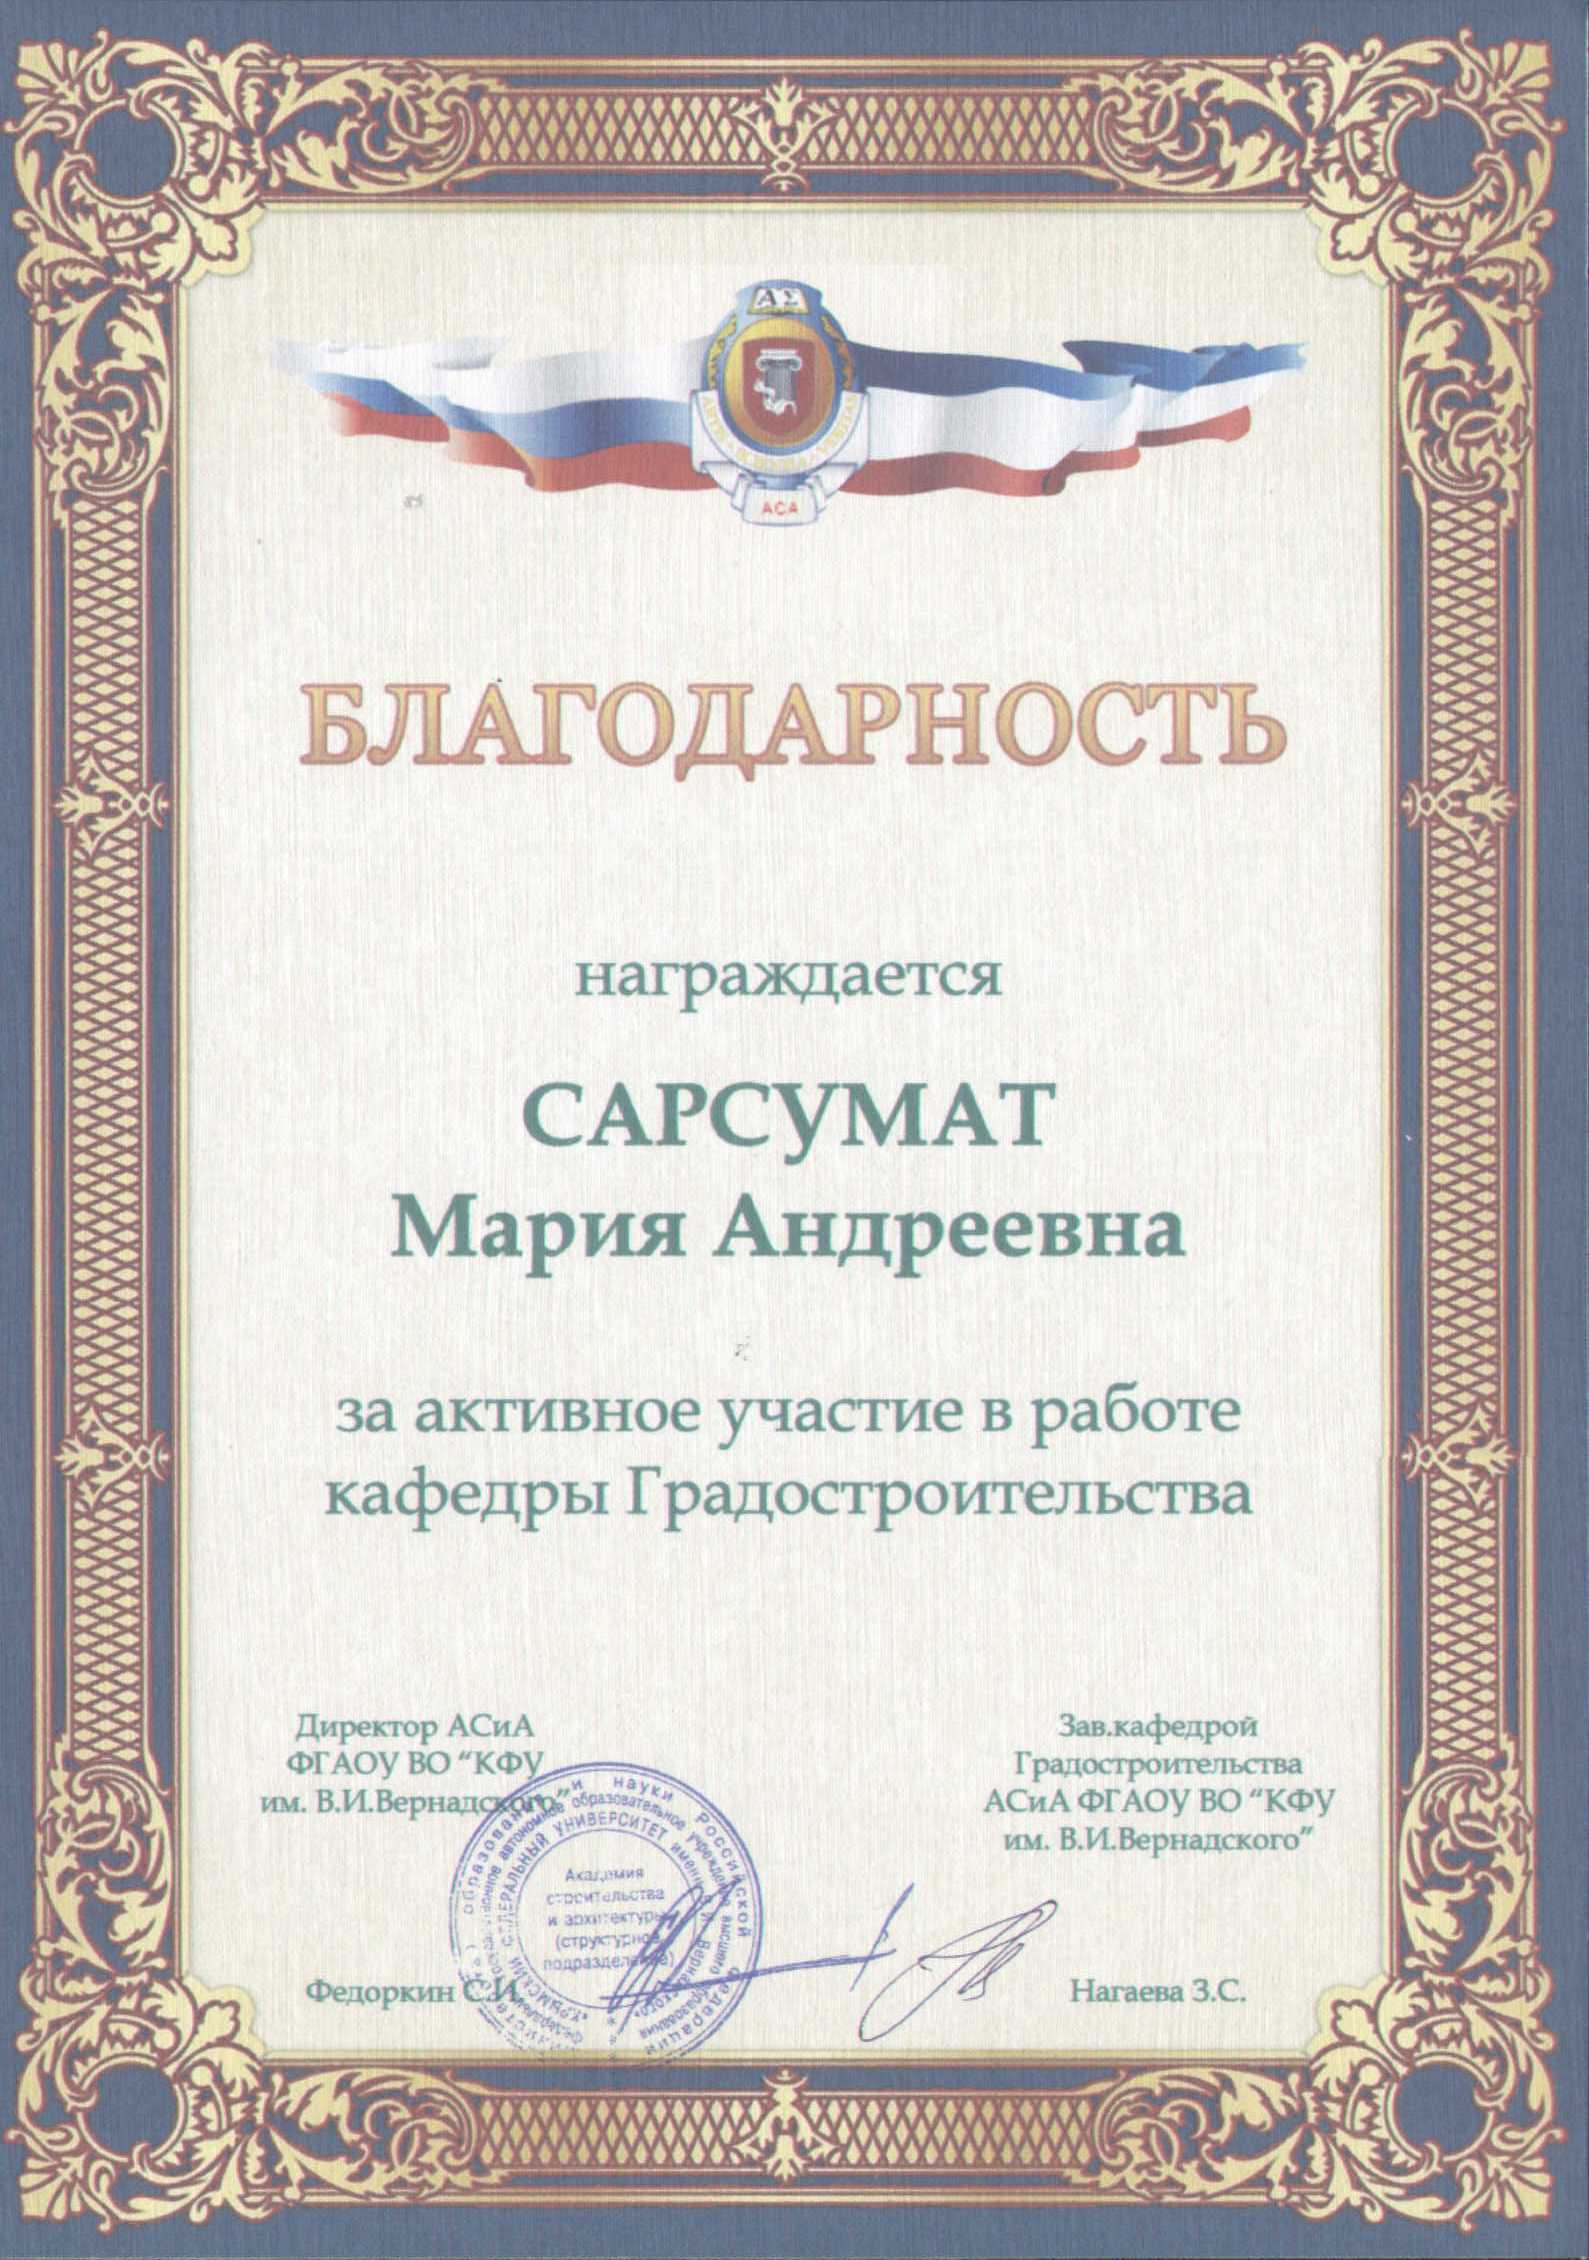 Сертификат инженерно-проектного бюро BuroProjects